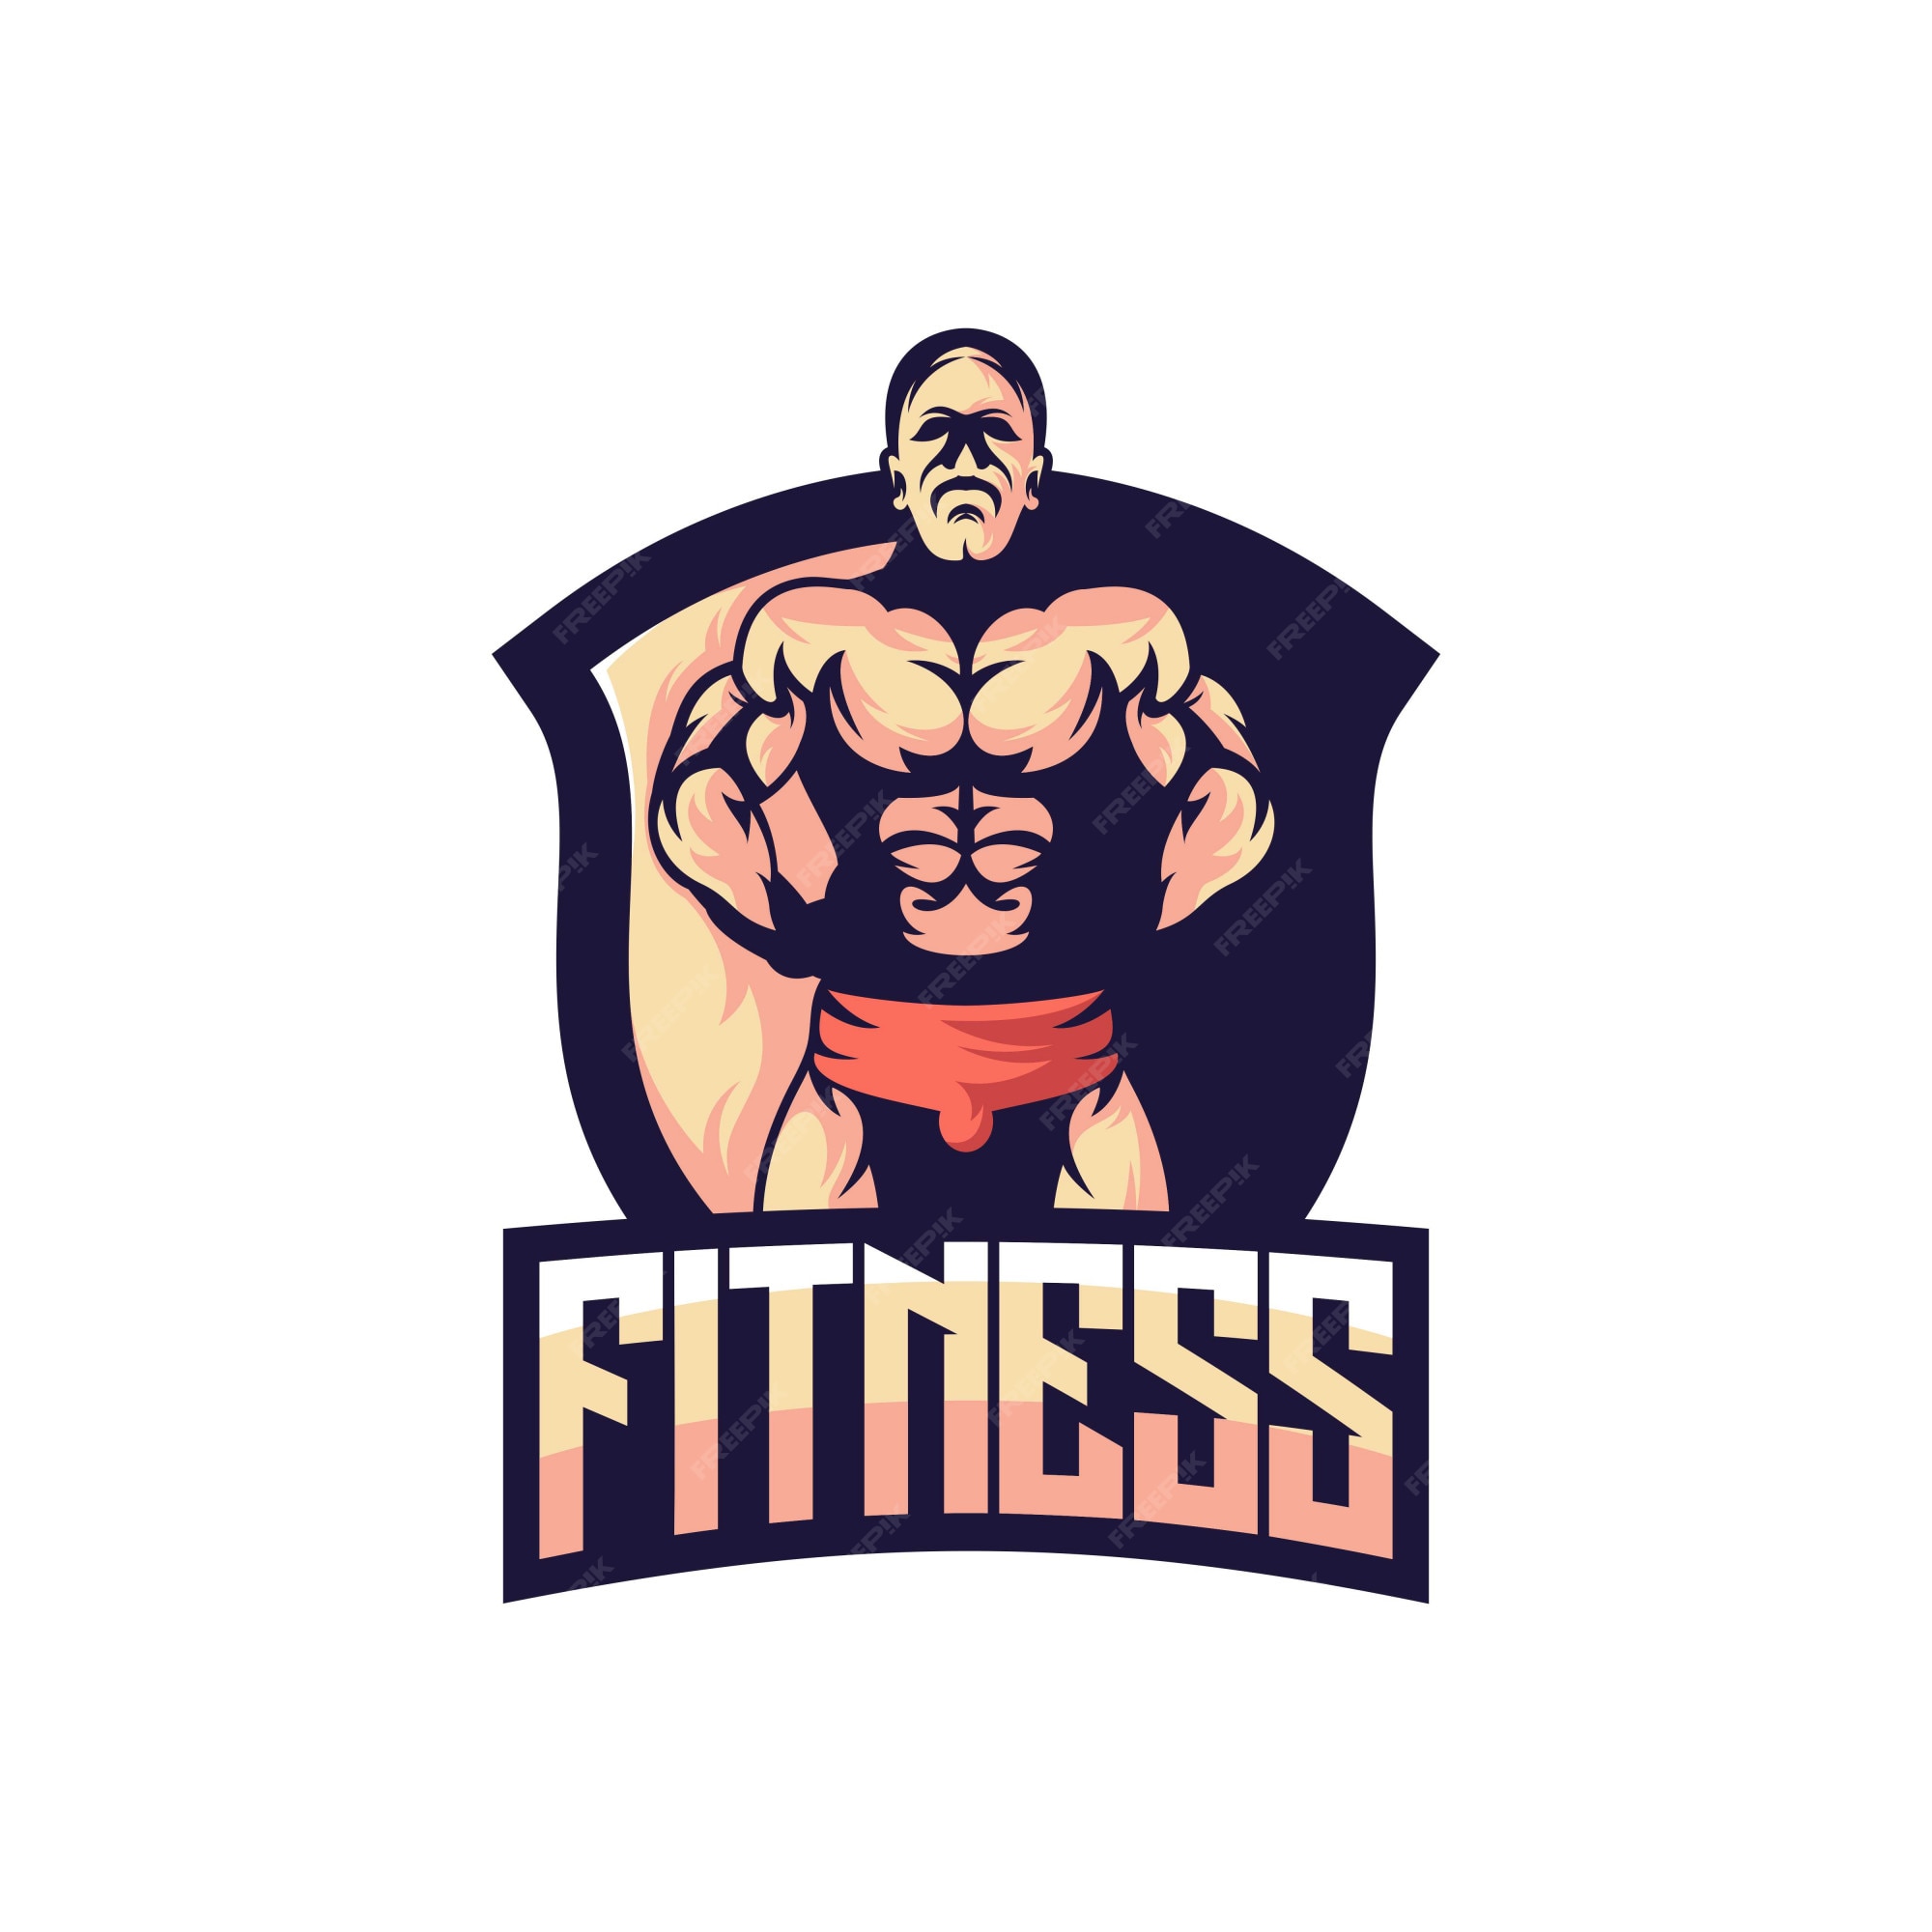 Premium Vector | Muscle fitness emblem